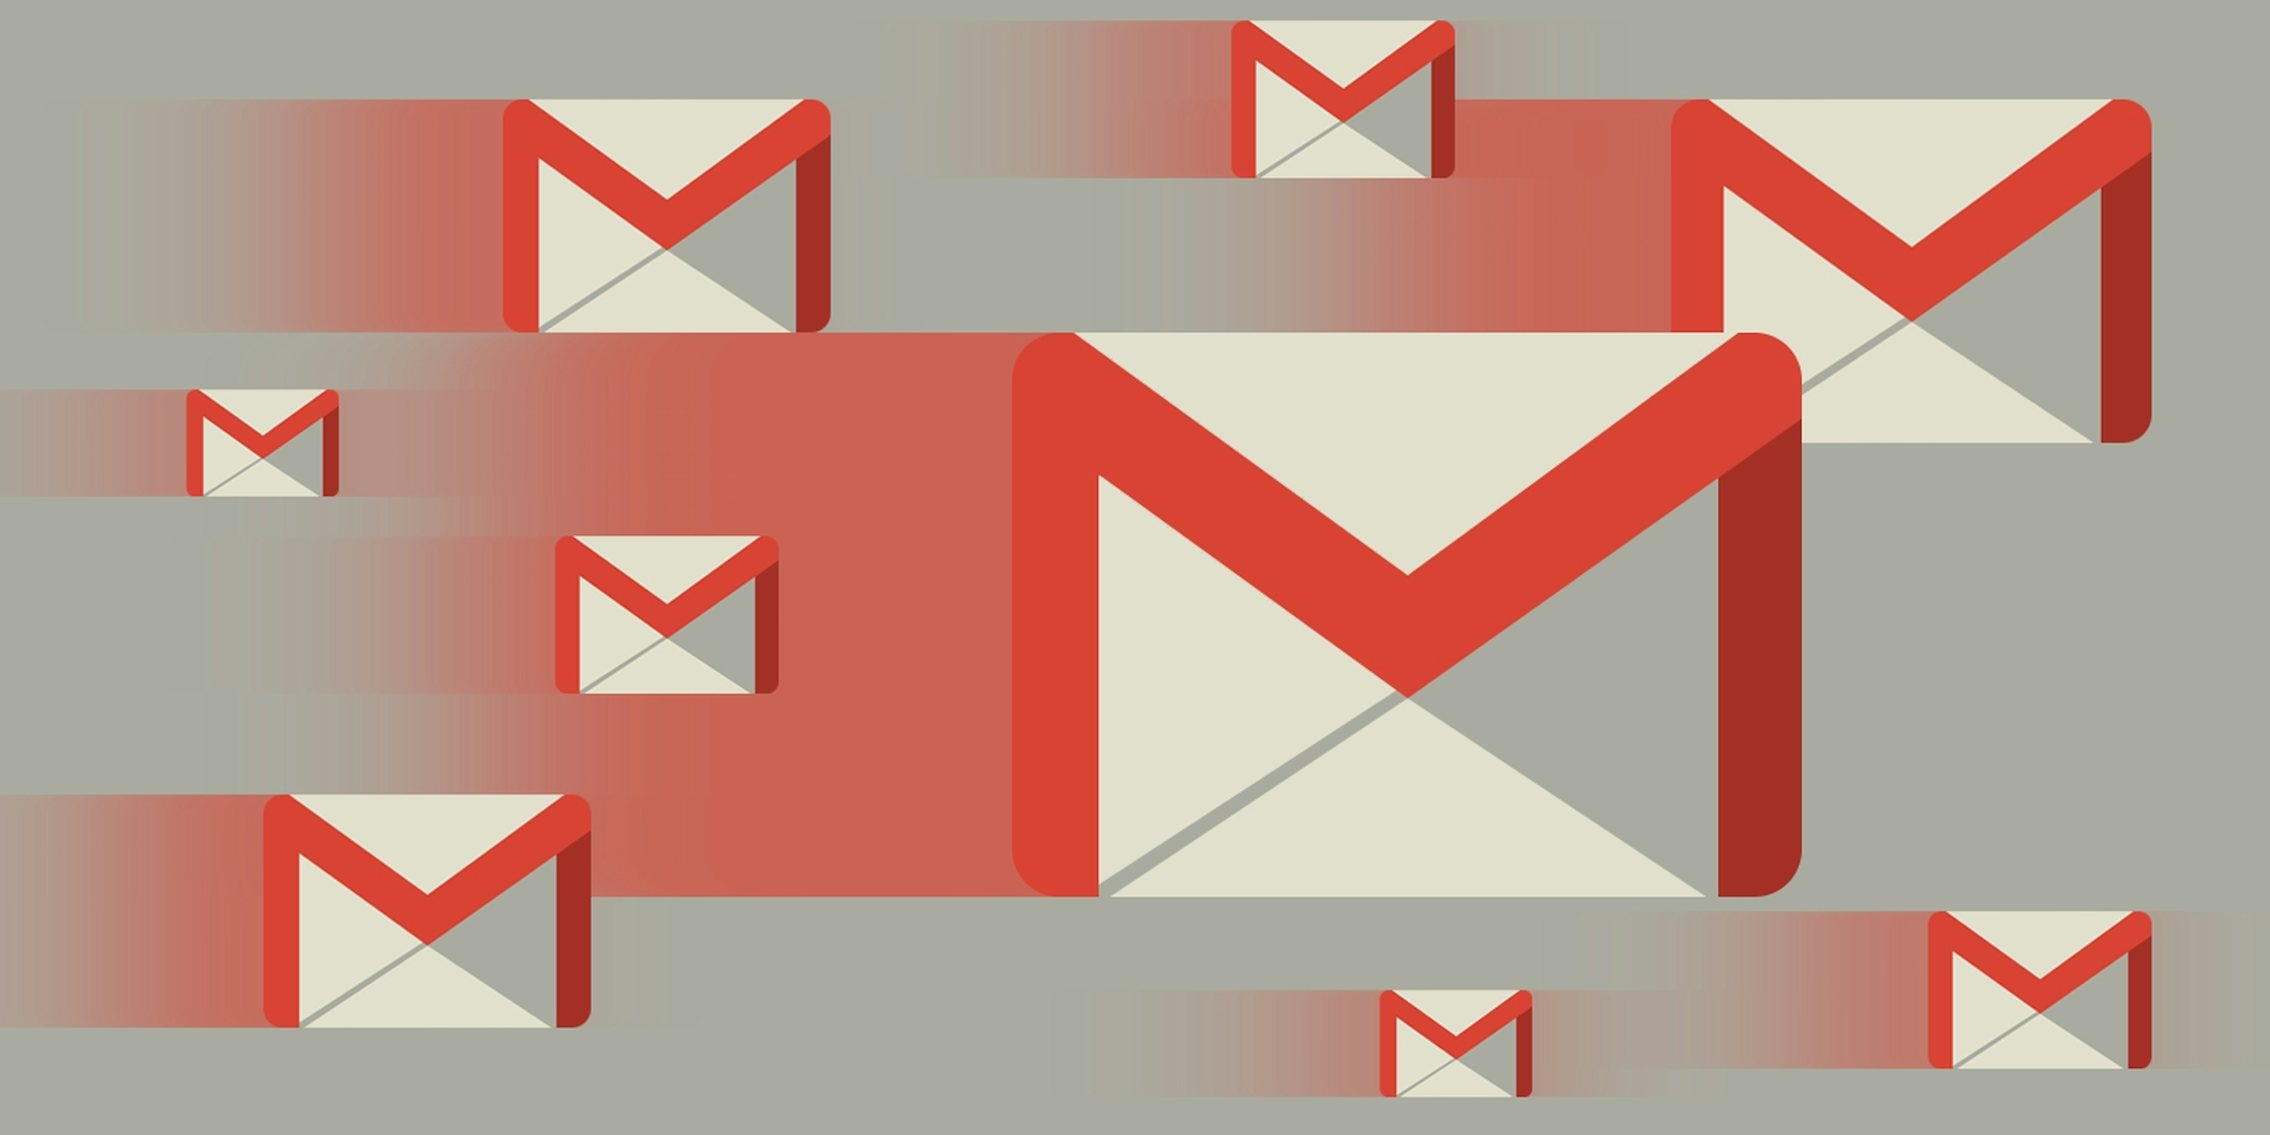 Https mail google mail inbox. Gmail почта. Gmail картинка. Почтовый сервис gmail.